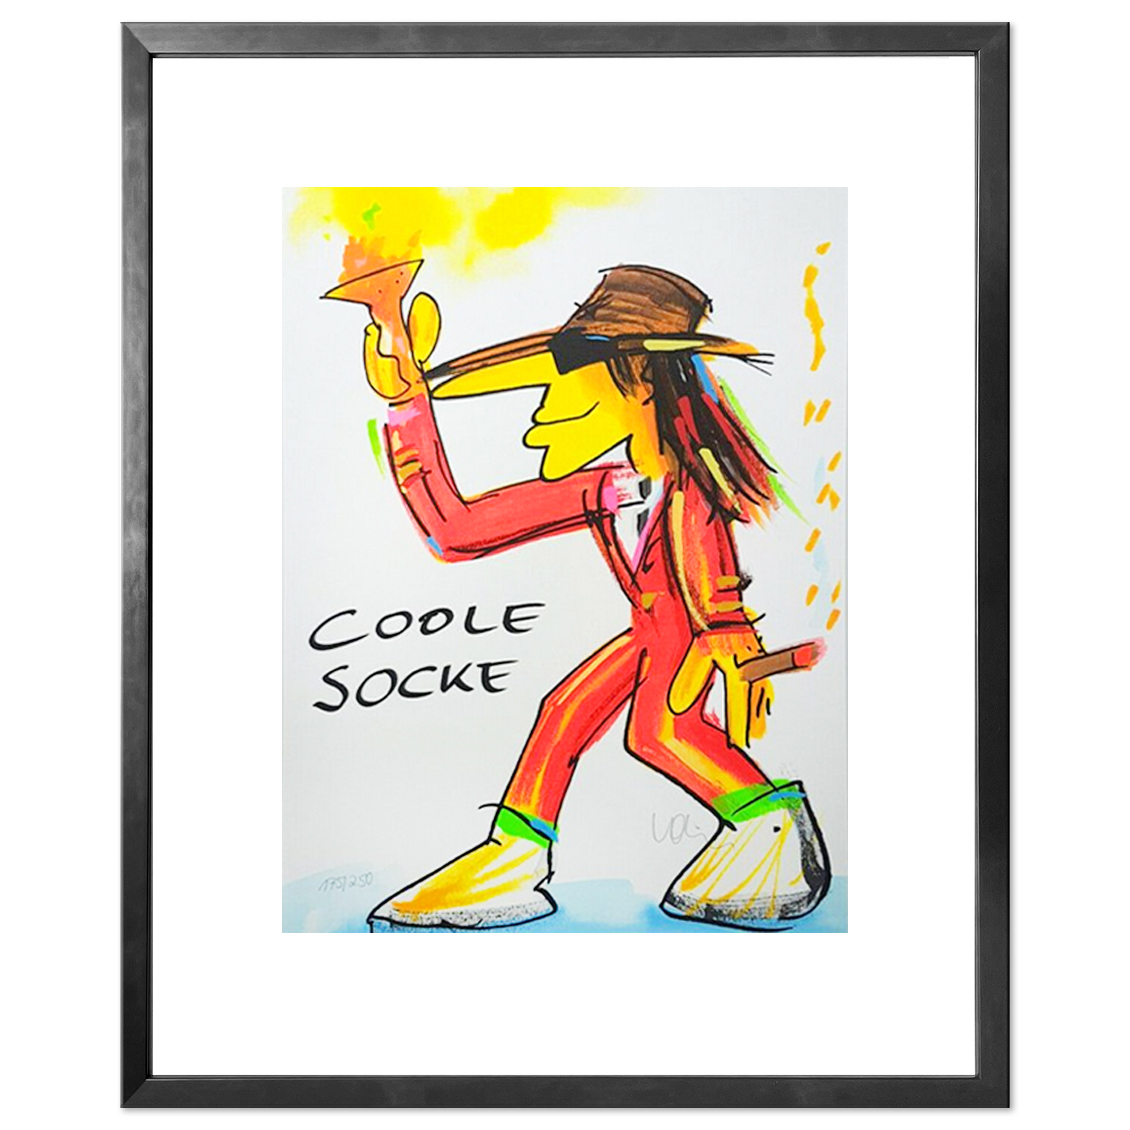 Udo Lindenberg Original Siebdruck "Coole Socke" limitiert